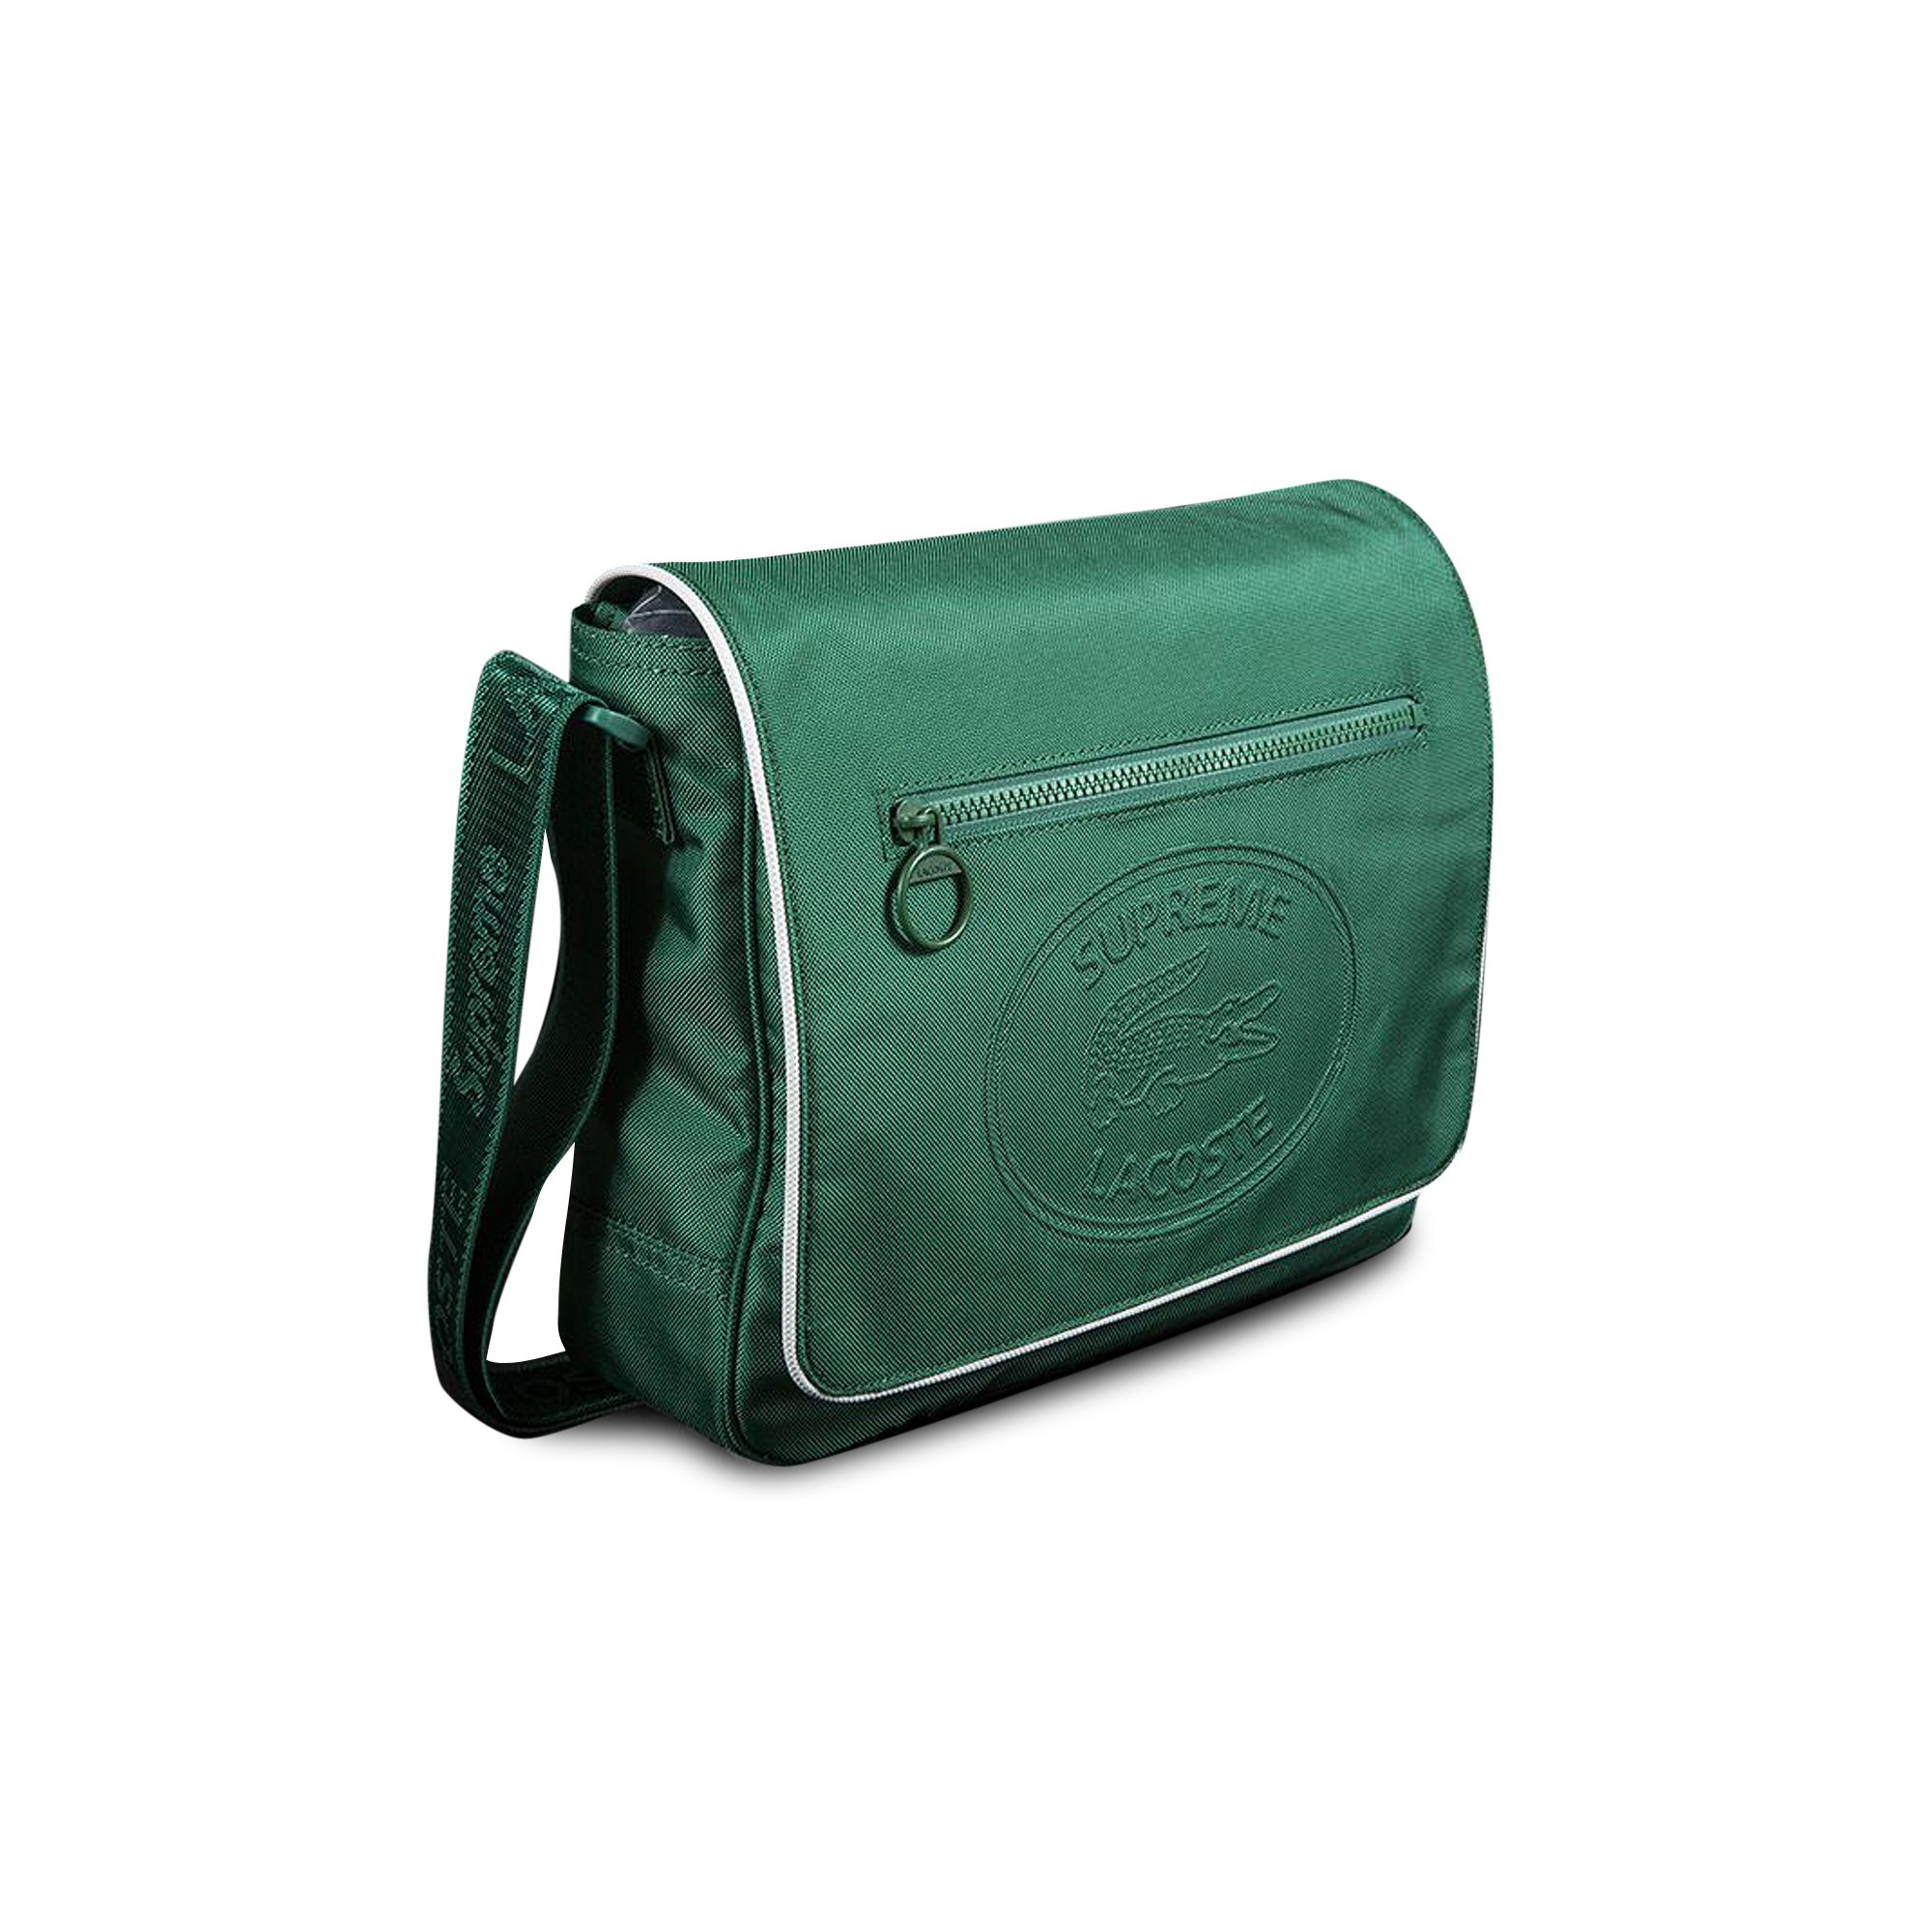 Supreme x Lacoste Small Messenger Bag 'Green'